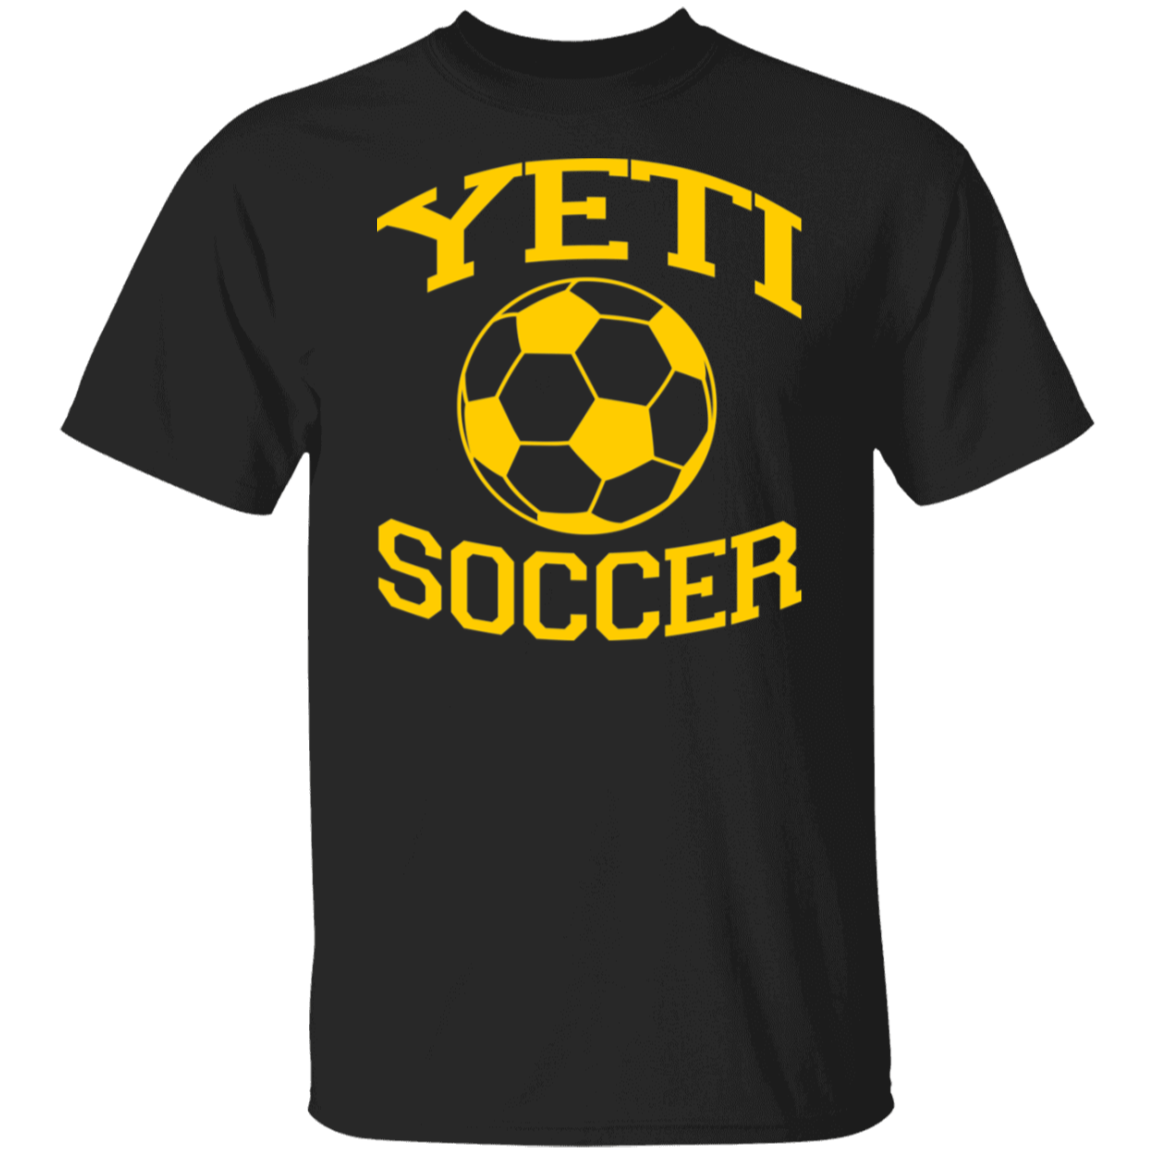 Yeti Soccer Yellow Gold Print T-Shirt